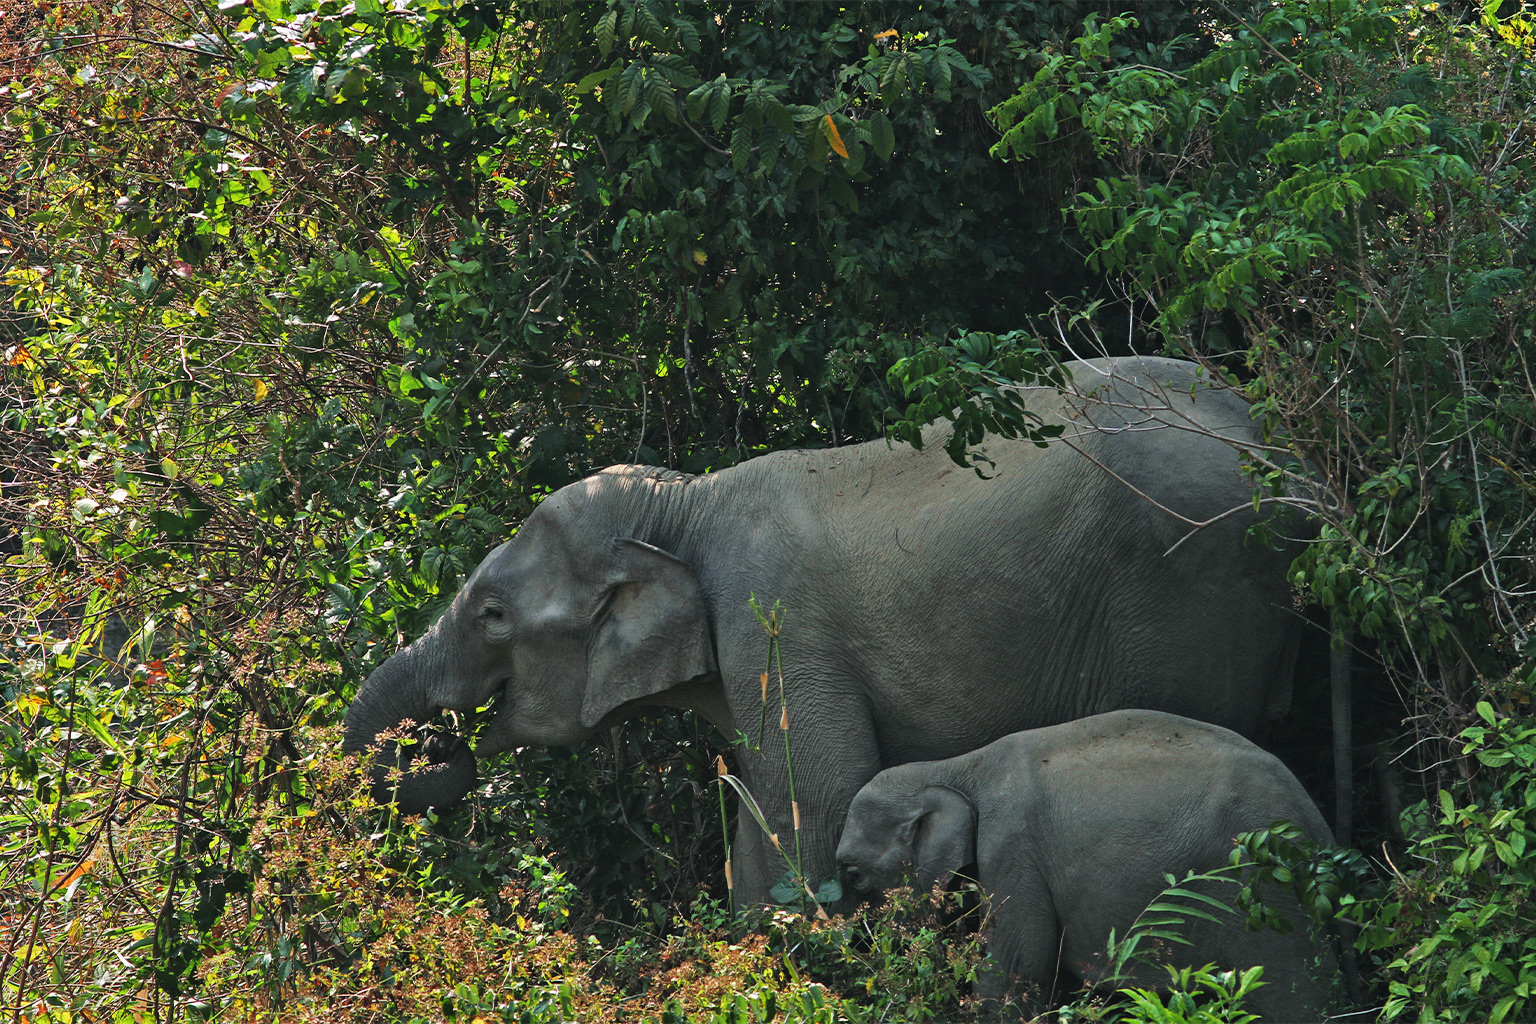 Wild elephants in Bangladesh.